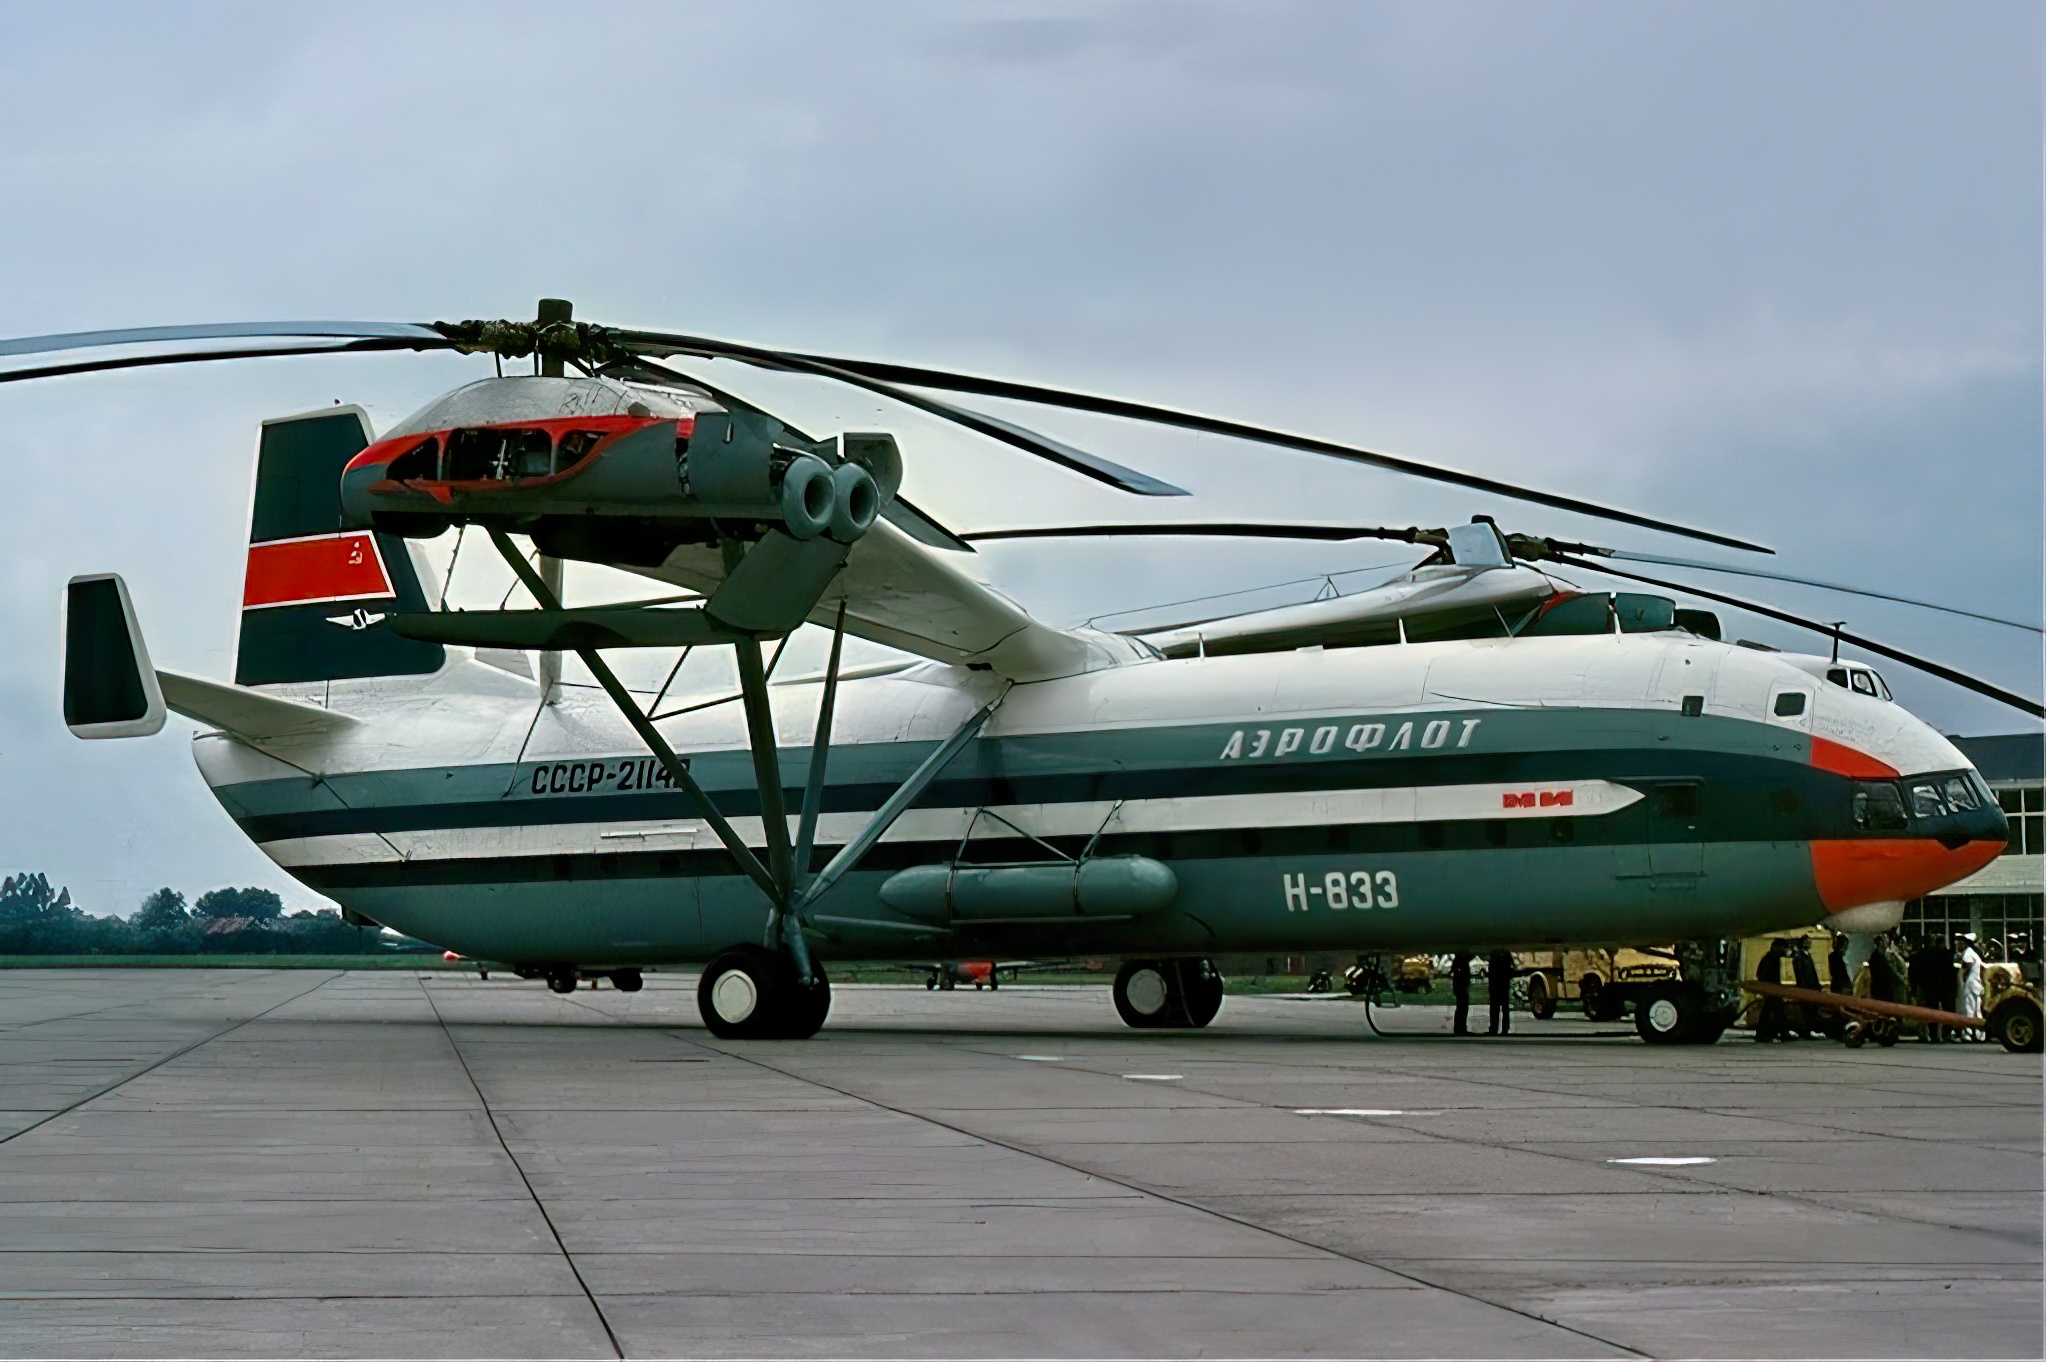 Aeroflot Mil V-12 (Mi-12) helicopter